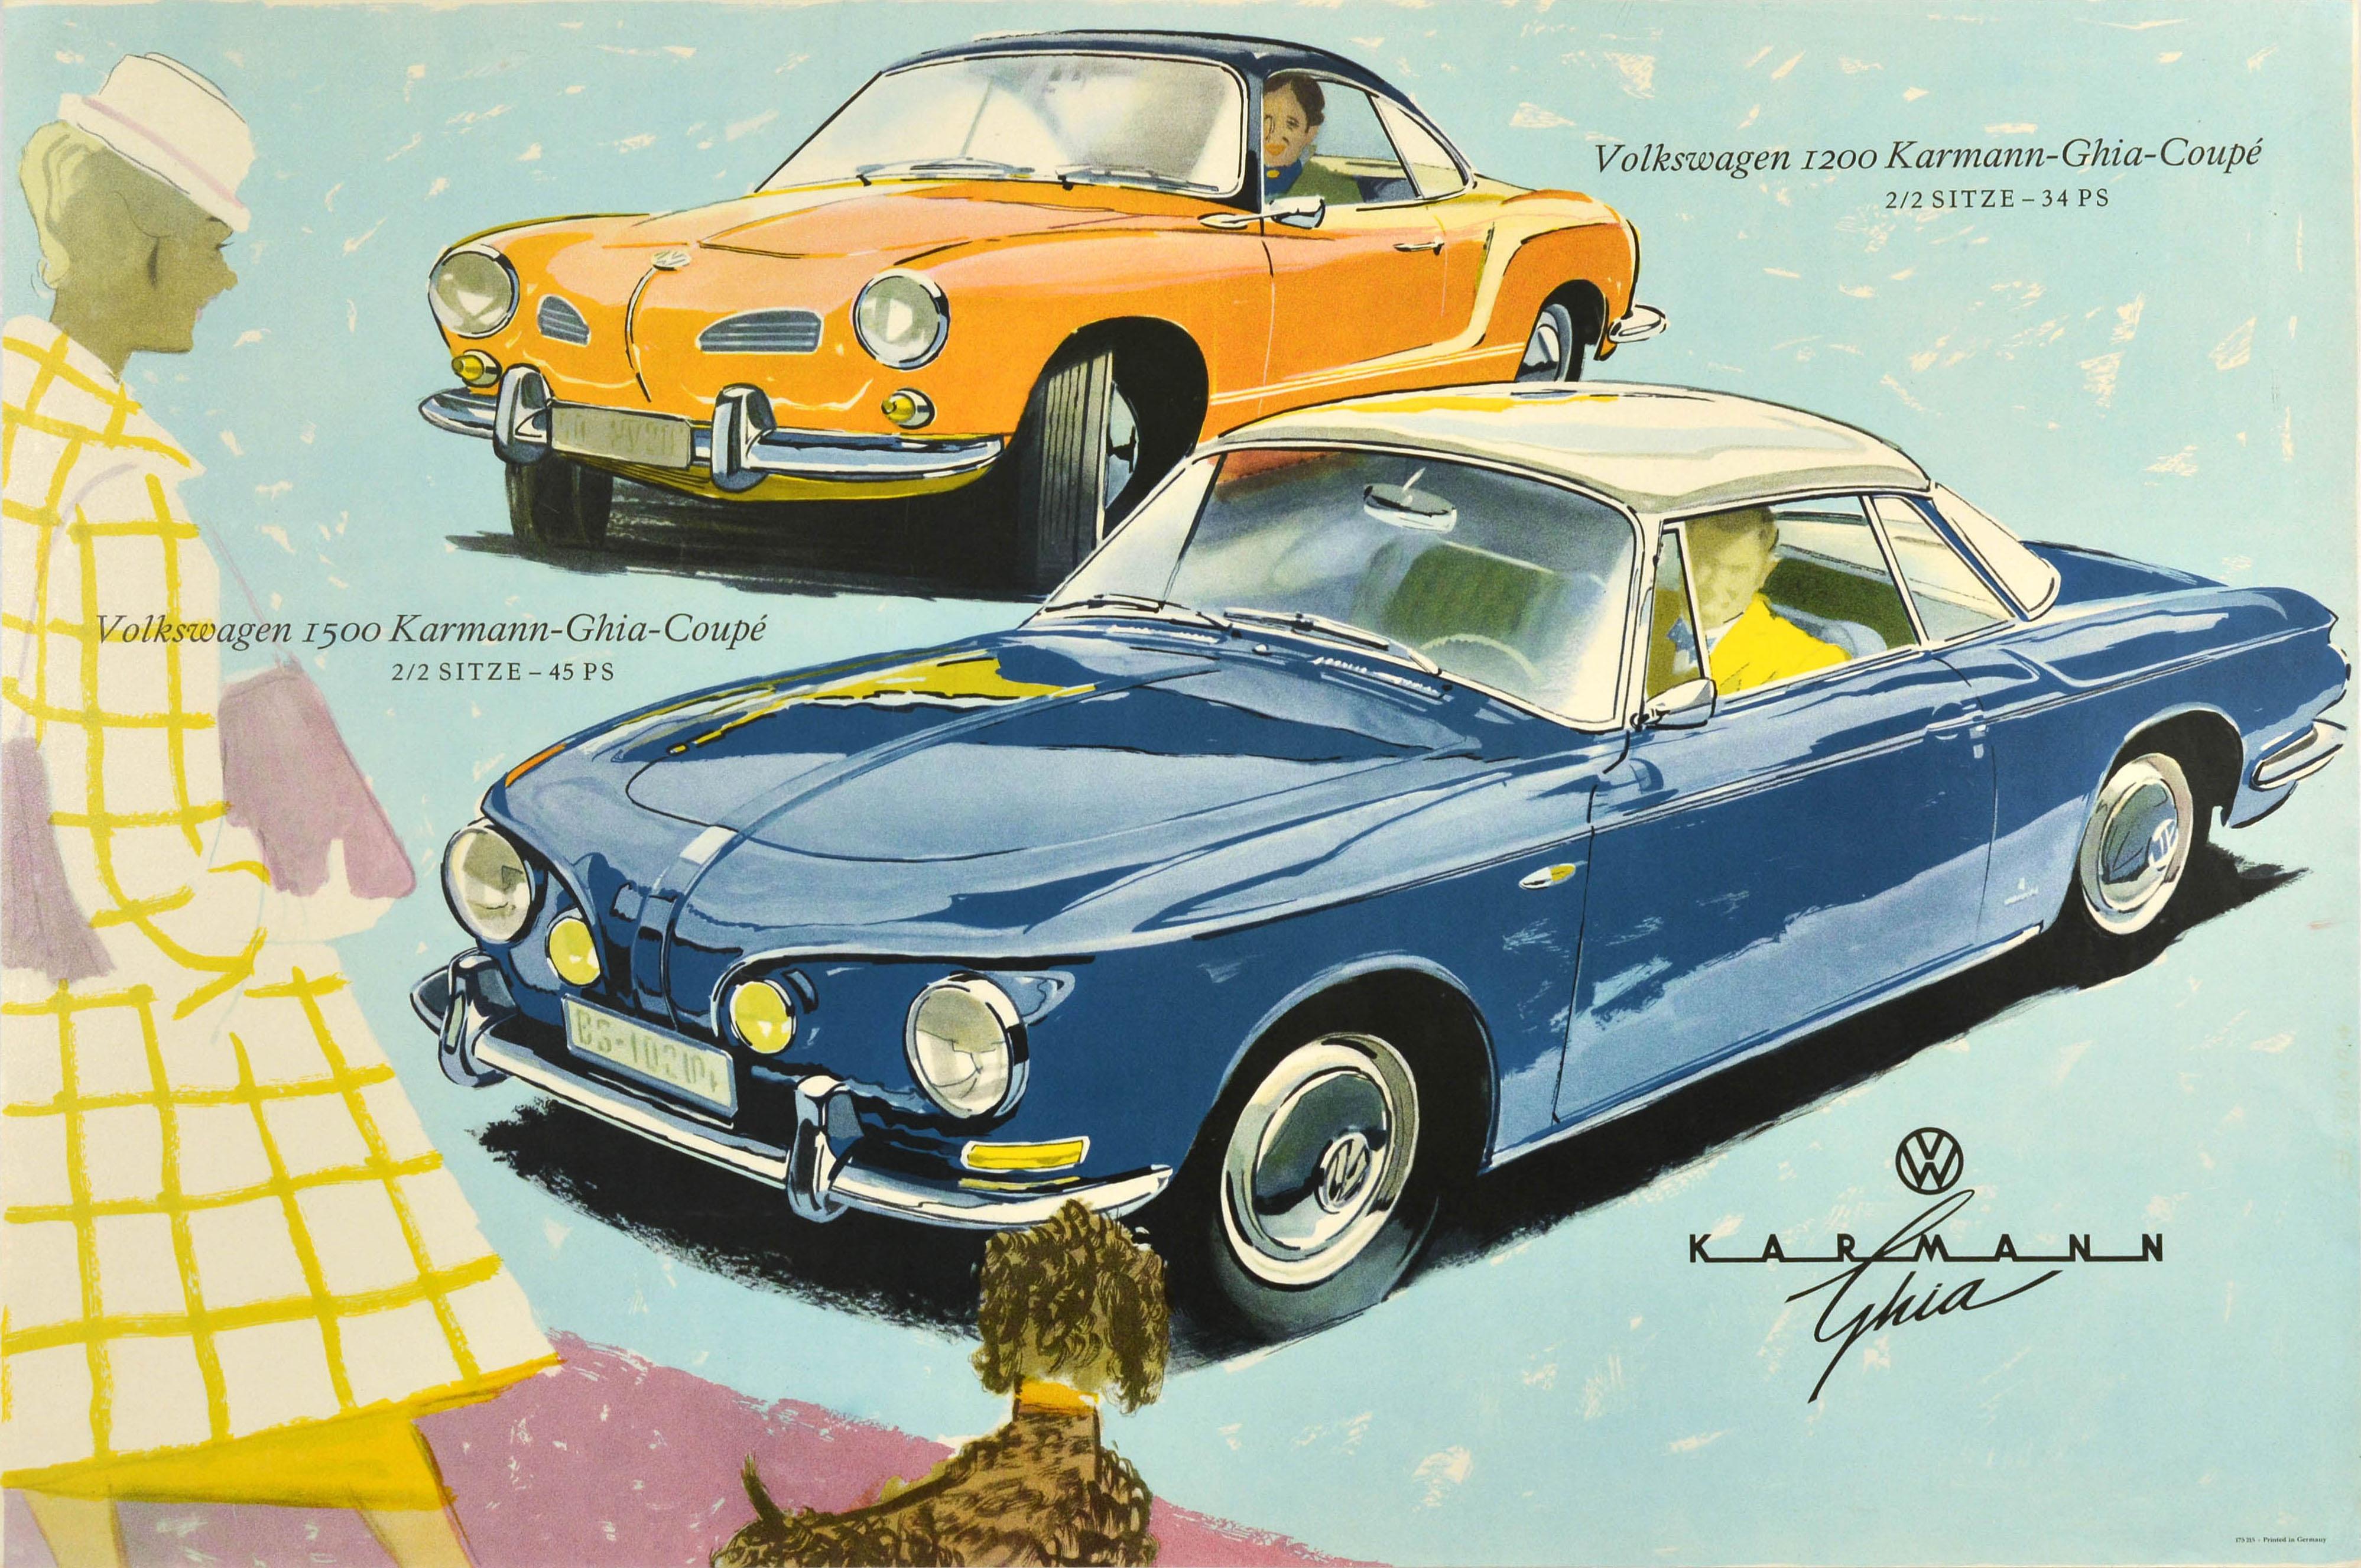 Unknown Print - Original Vintage VW Car Advertising Poster Volkswagen Karmann Ghia Automobile